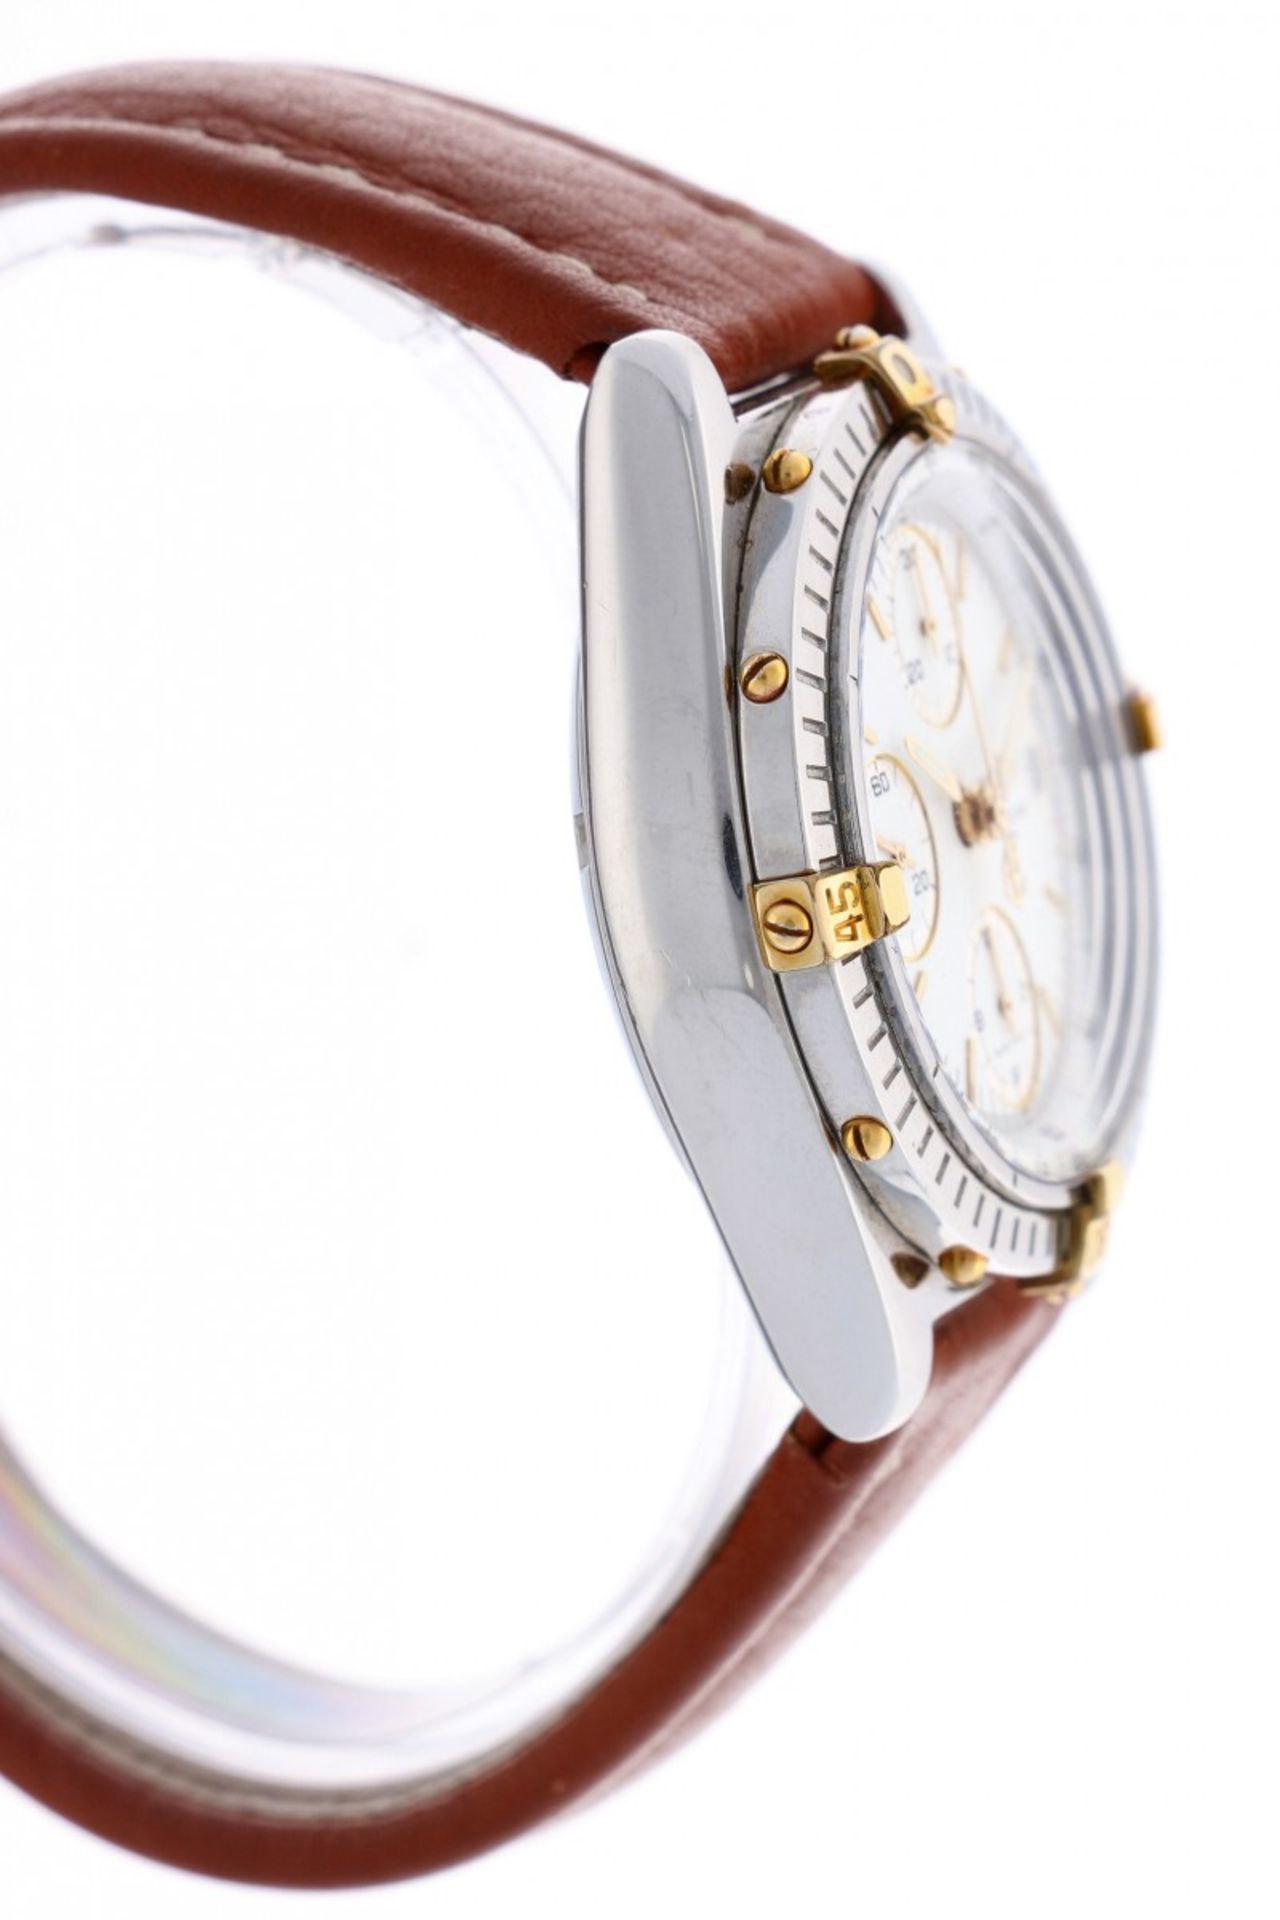 Breitling Chronomat B13050 - Men's watch - ca. 2000 - Image 4 of 5